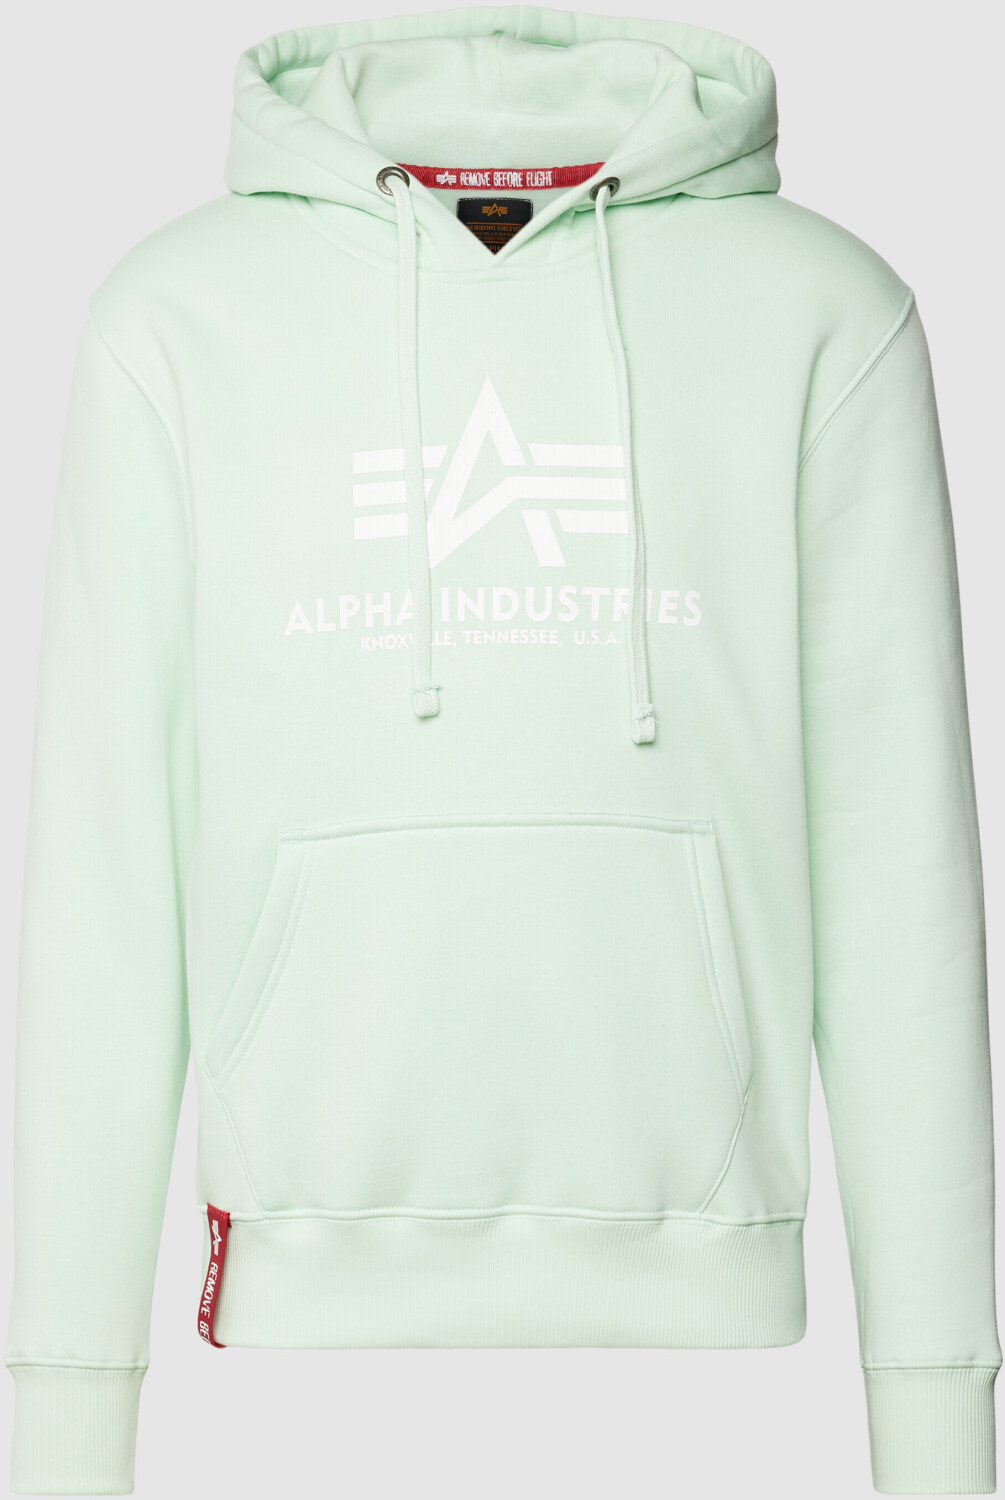 Alpha Industries Basic Hoodie green 54,99 (178312-043) ab | Preisvergleich bei €